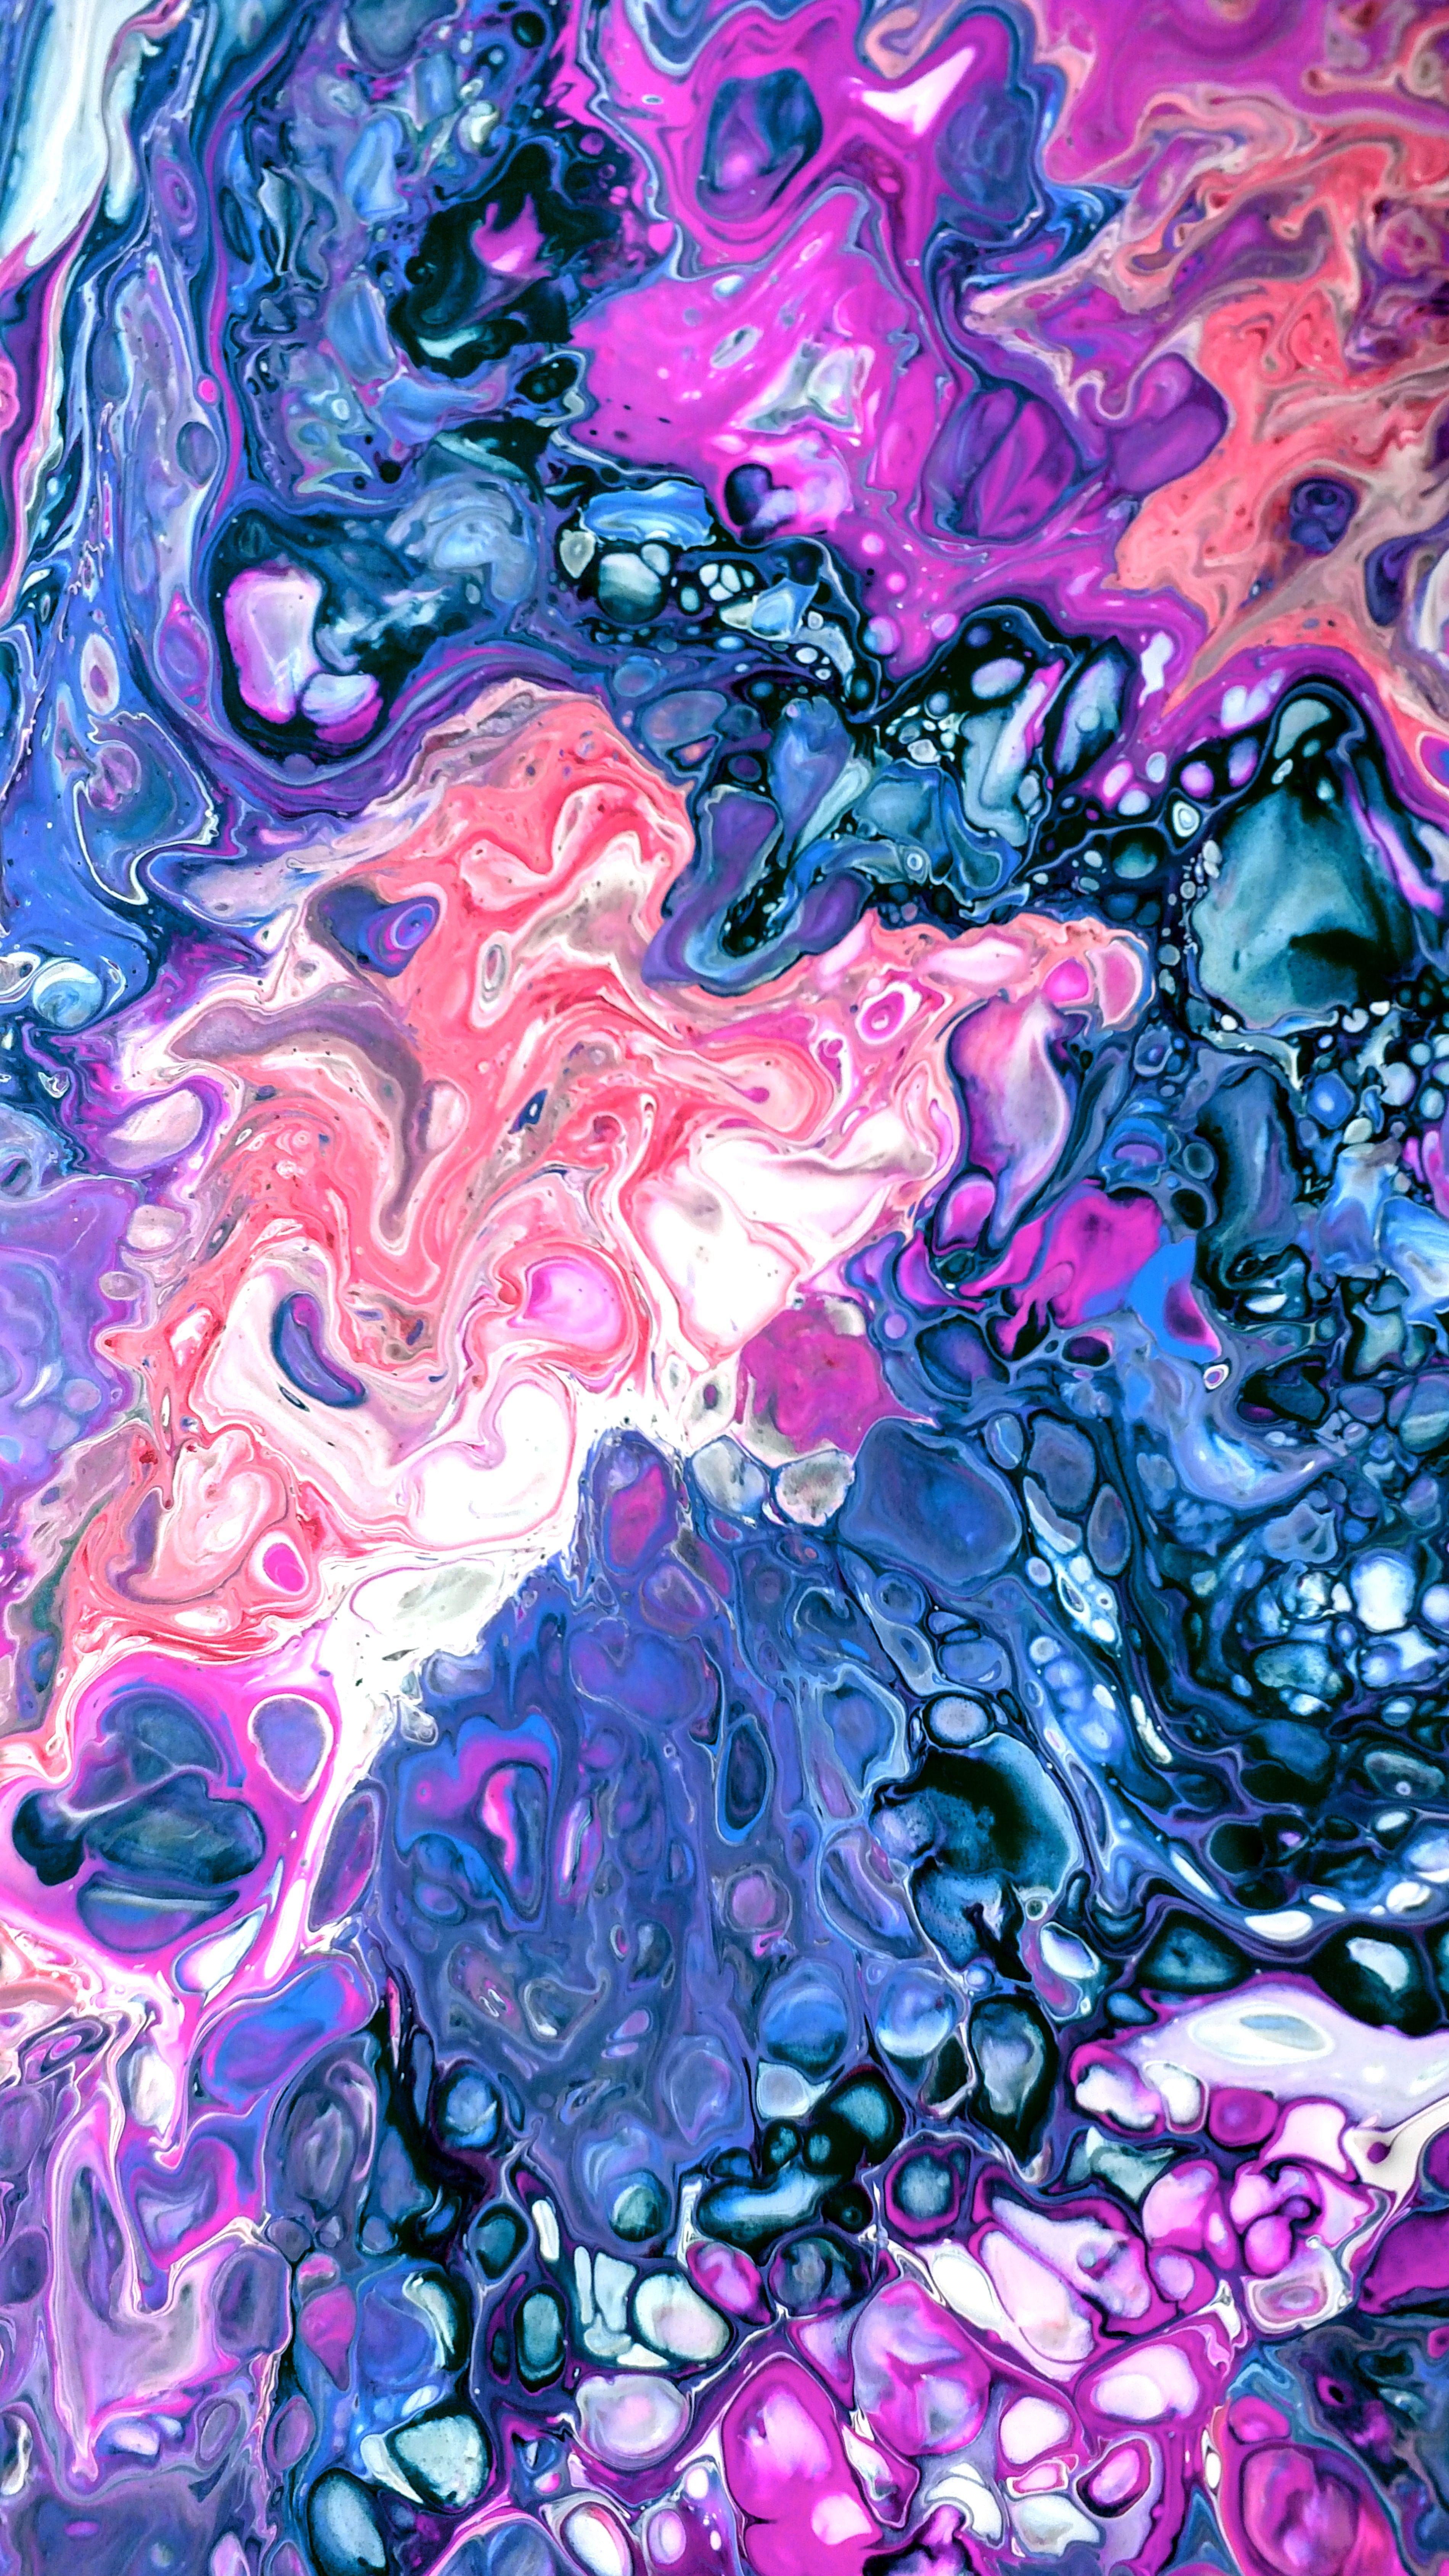 Fun colors in a fluid pour painting #originalart. Art Fluid